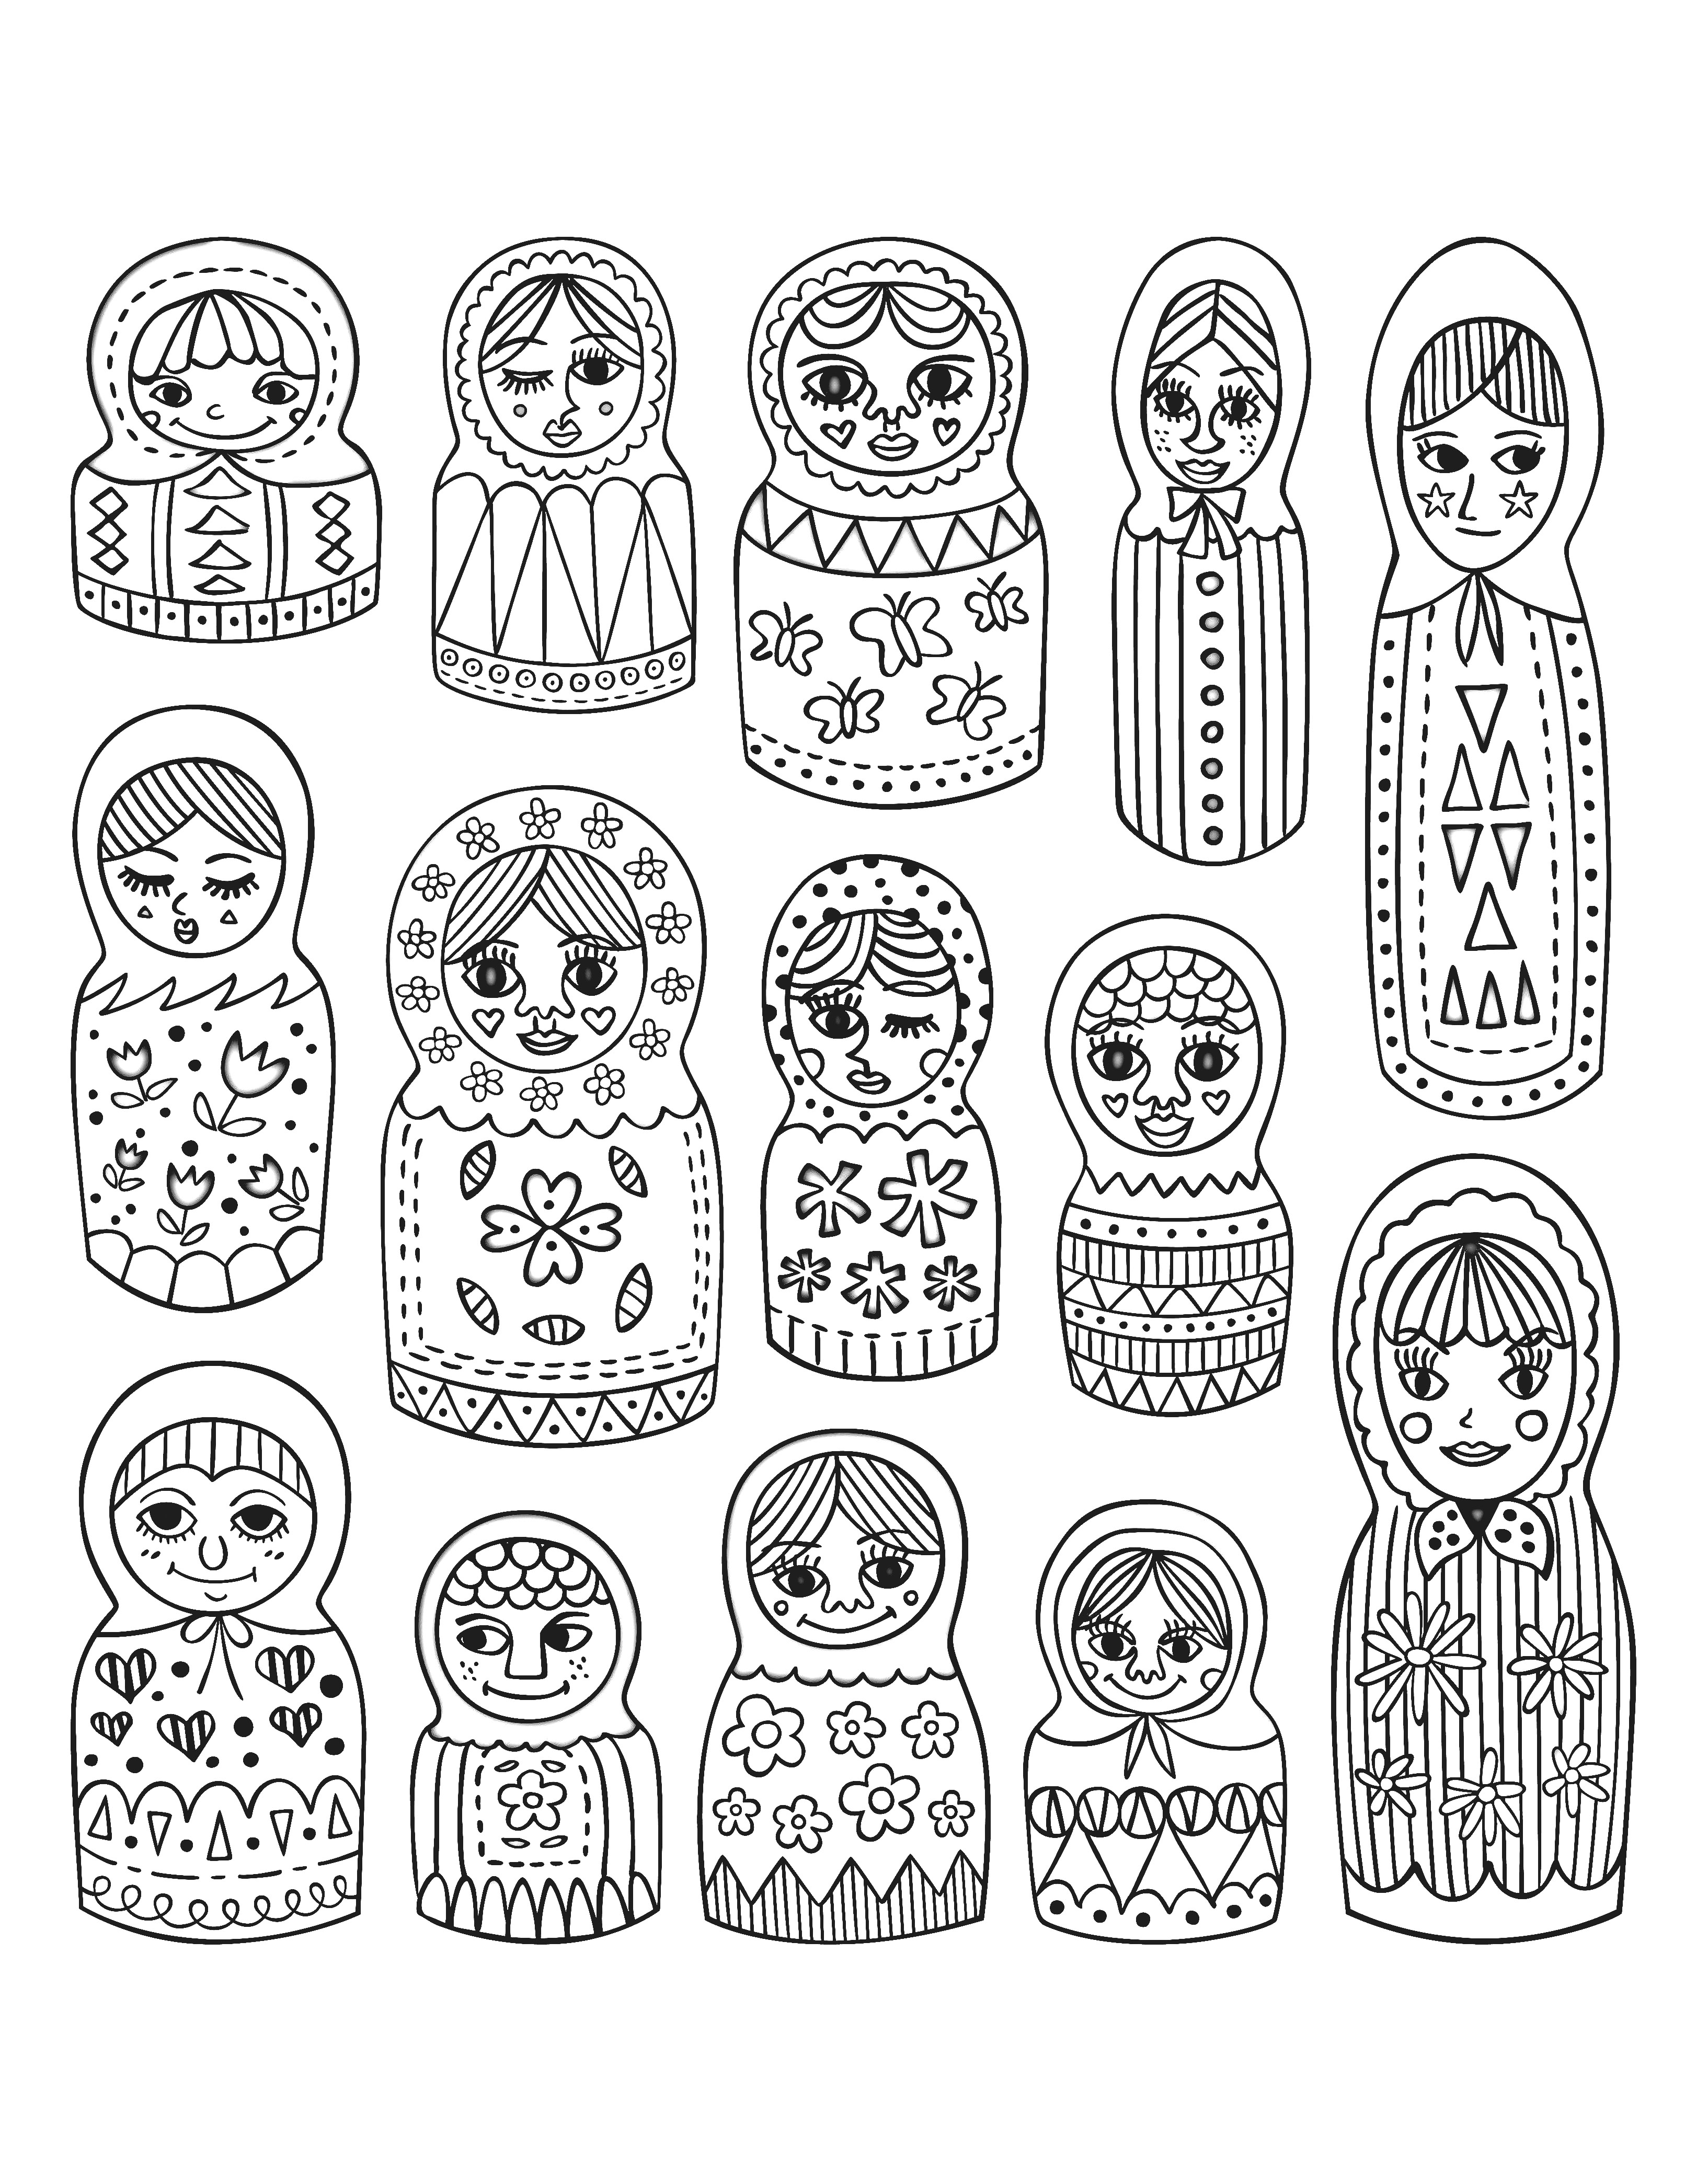 Cute Matryoshka dolls, different styles